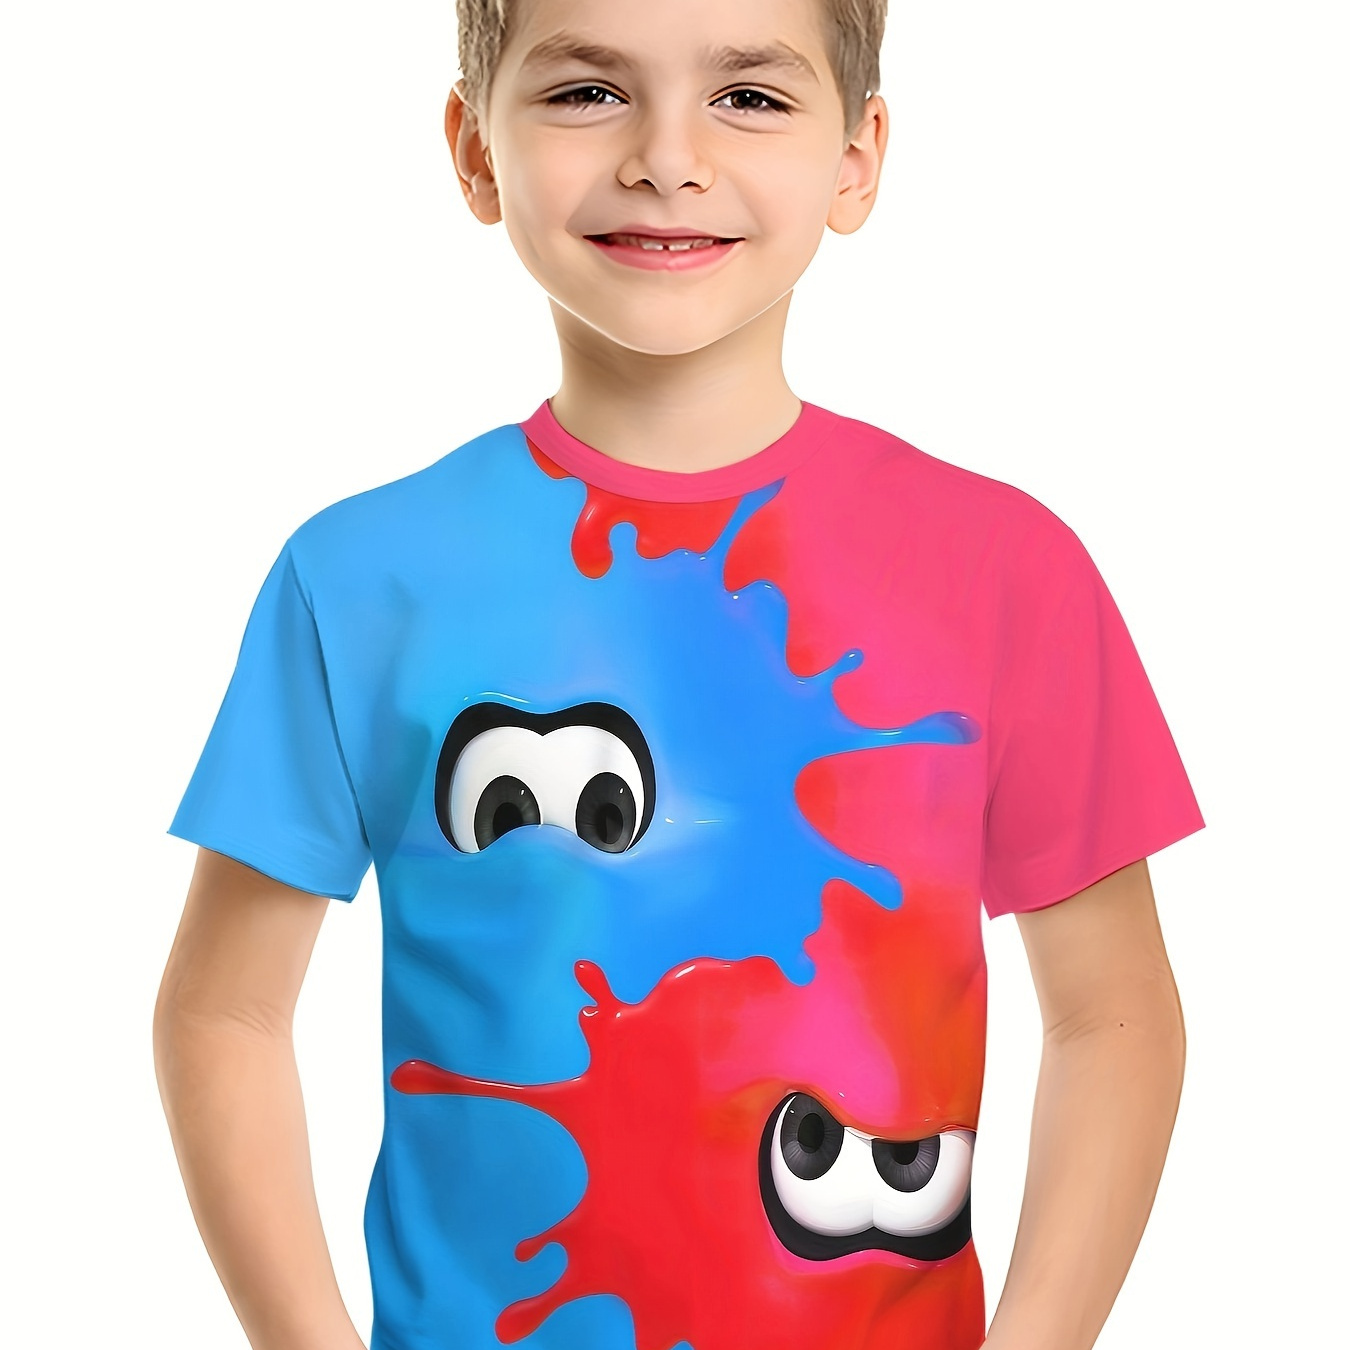 

Boy's Fun Cartoon Print Crew Neck T-shirt, Active Slightly Short Sleeve Top, Summer Outdoor Children's Clothing